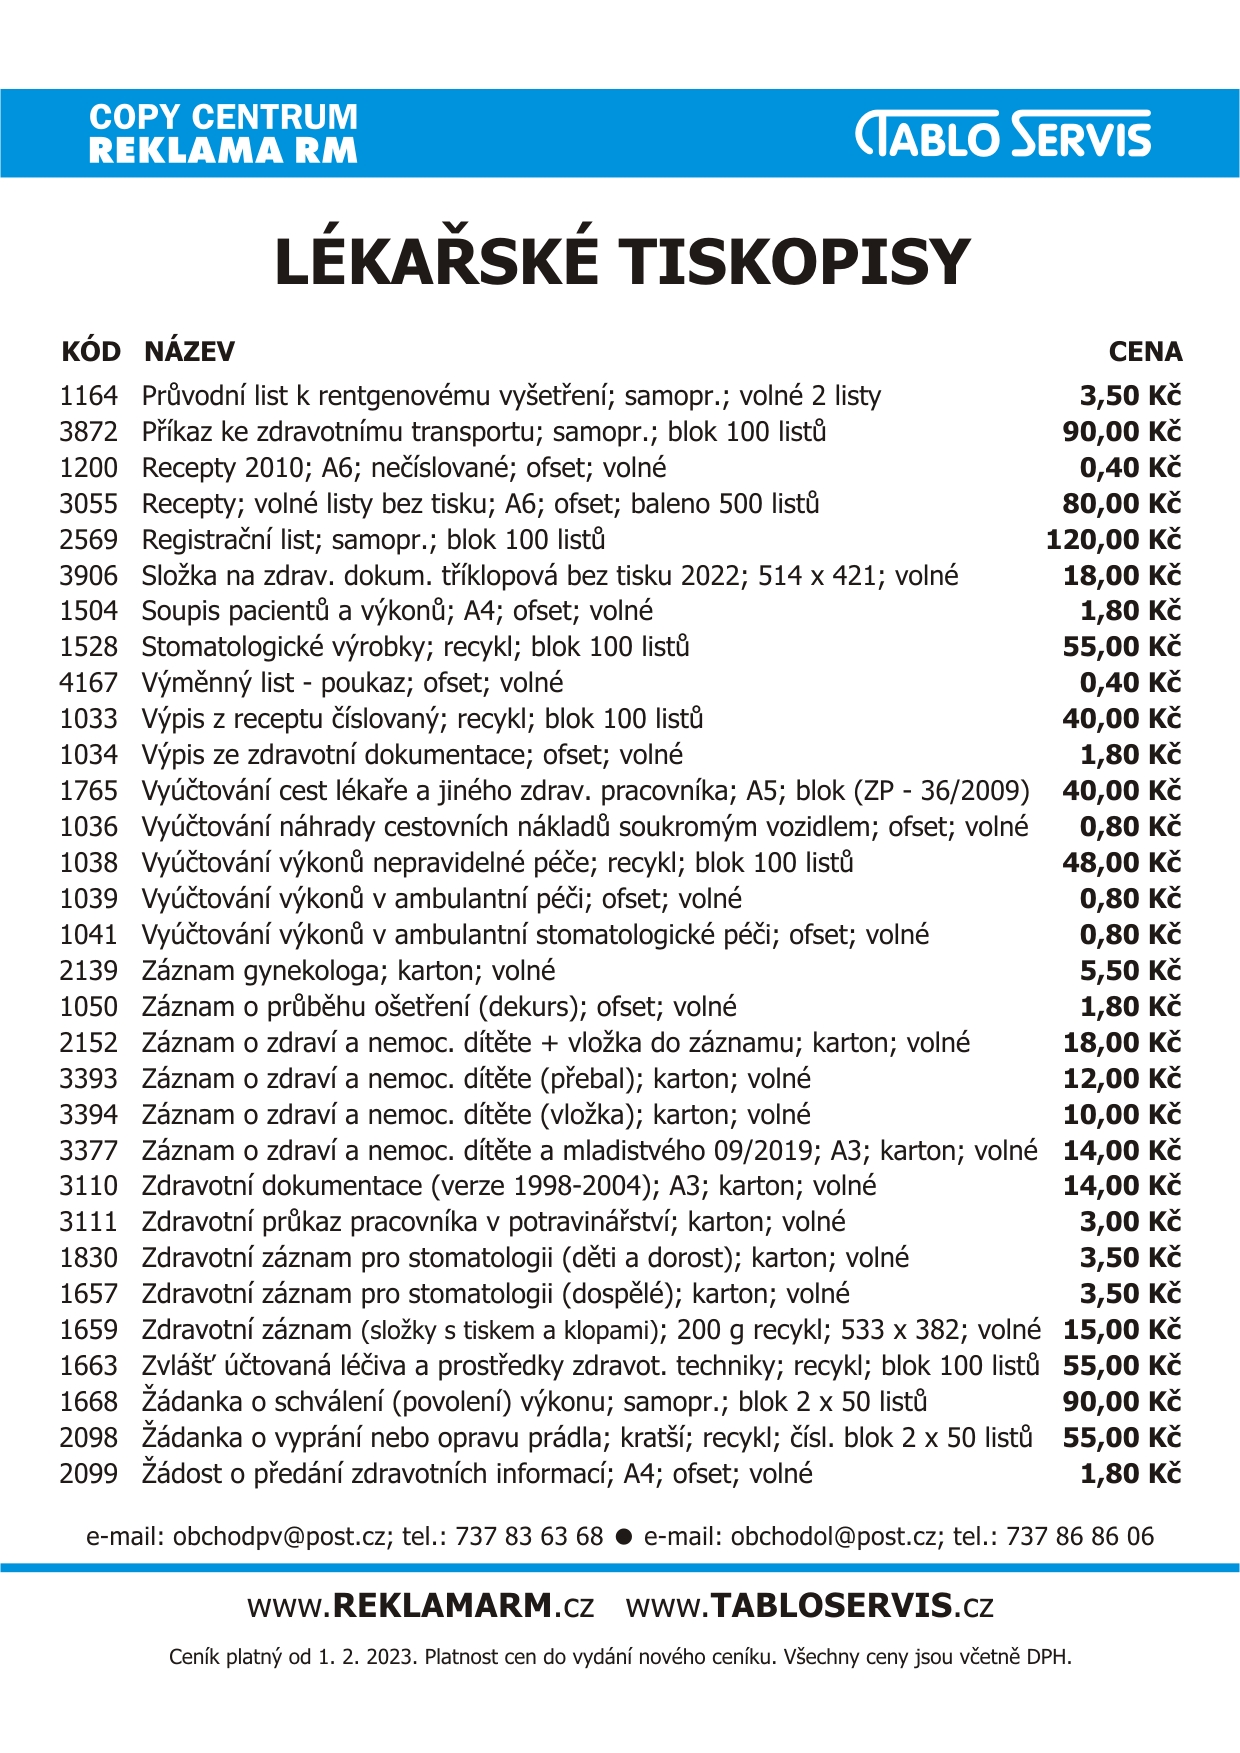 Lekarske_tiskopisy_2_copy